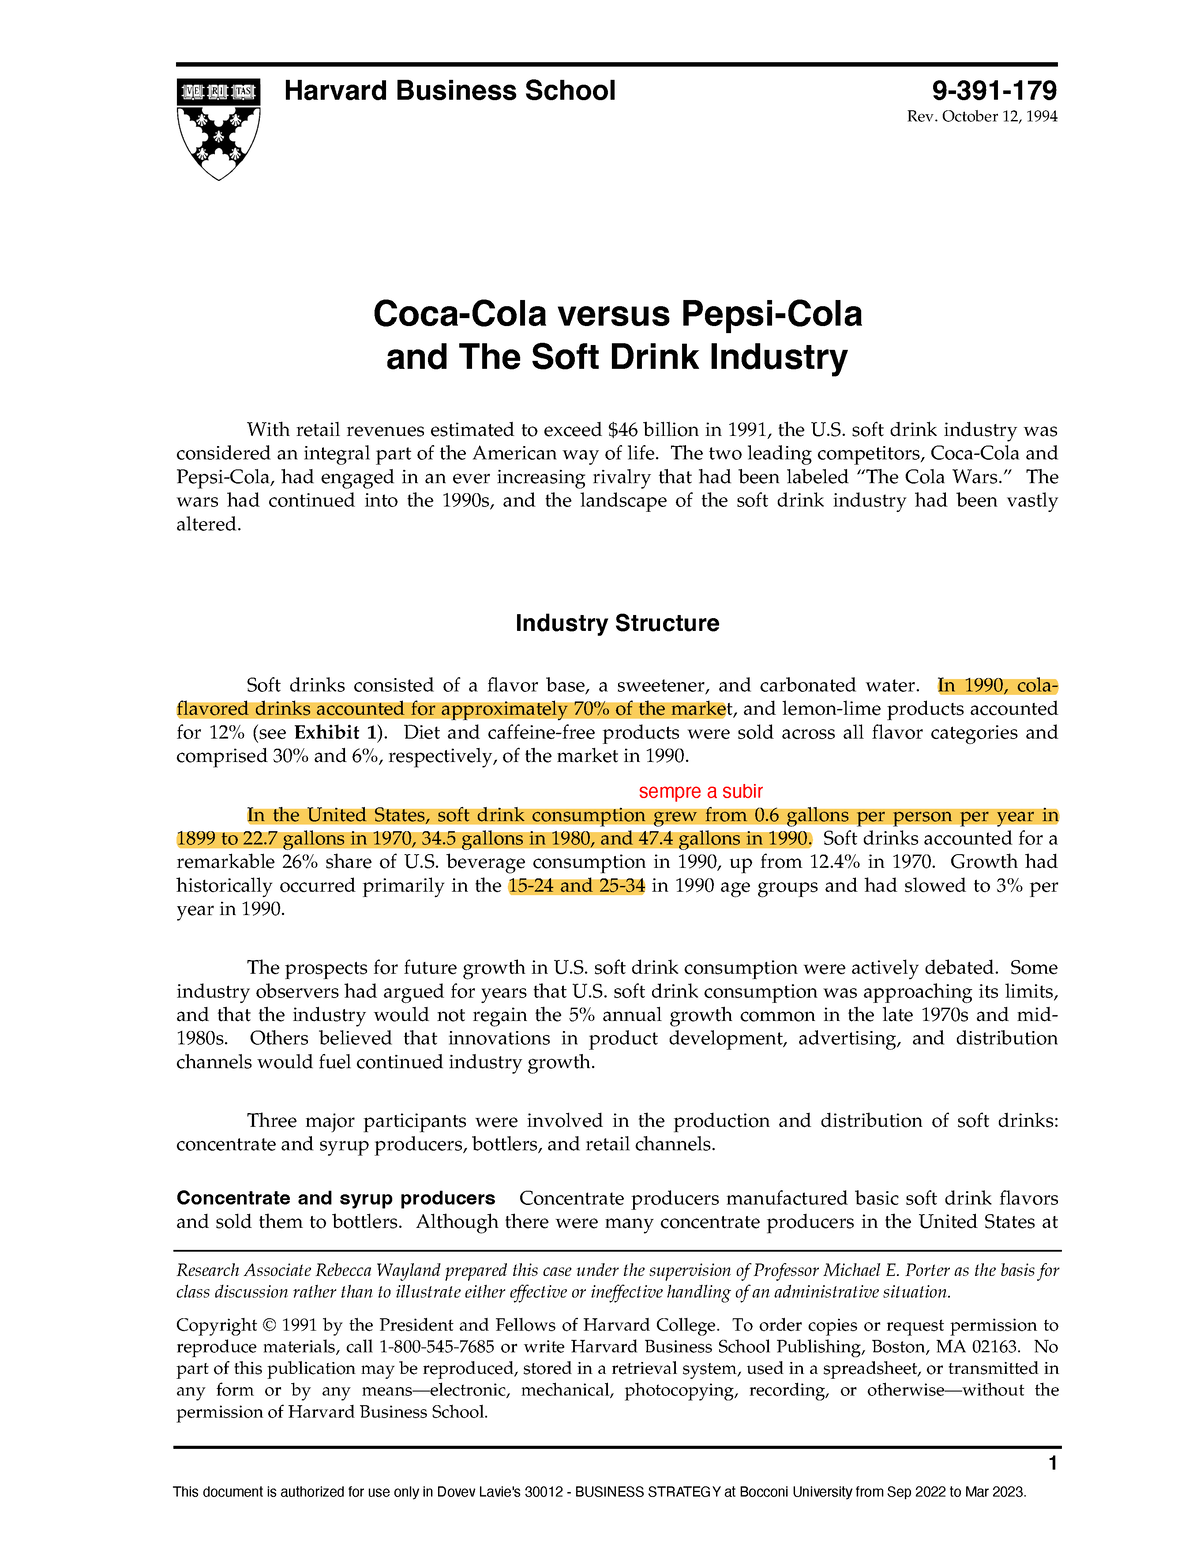 harvard business school coca cola case study